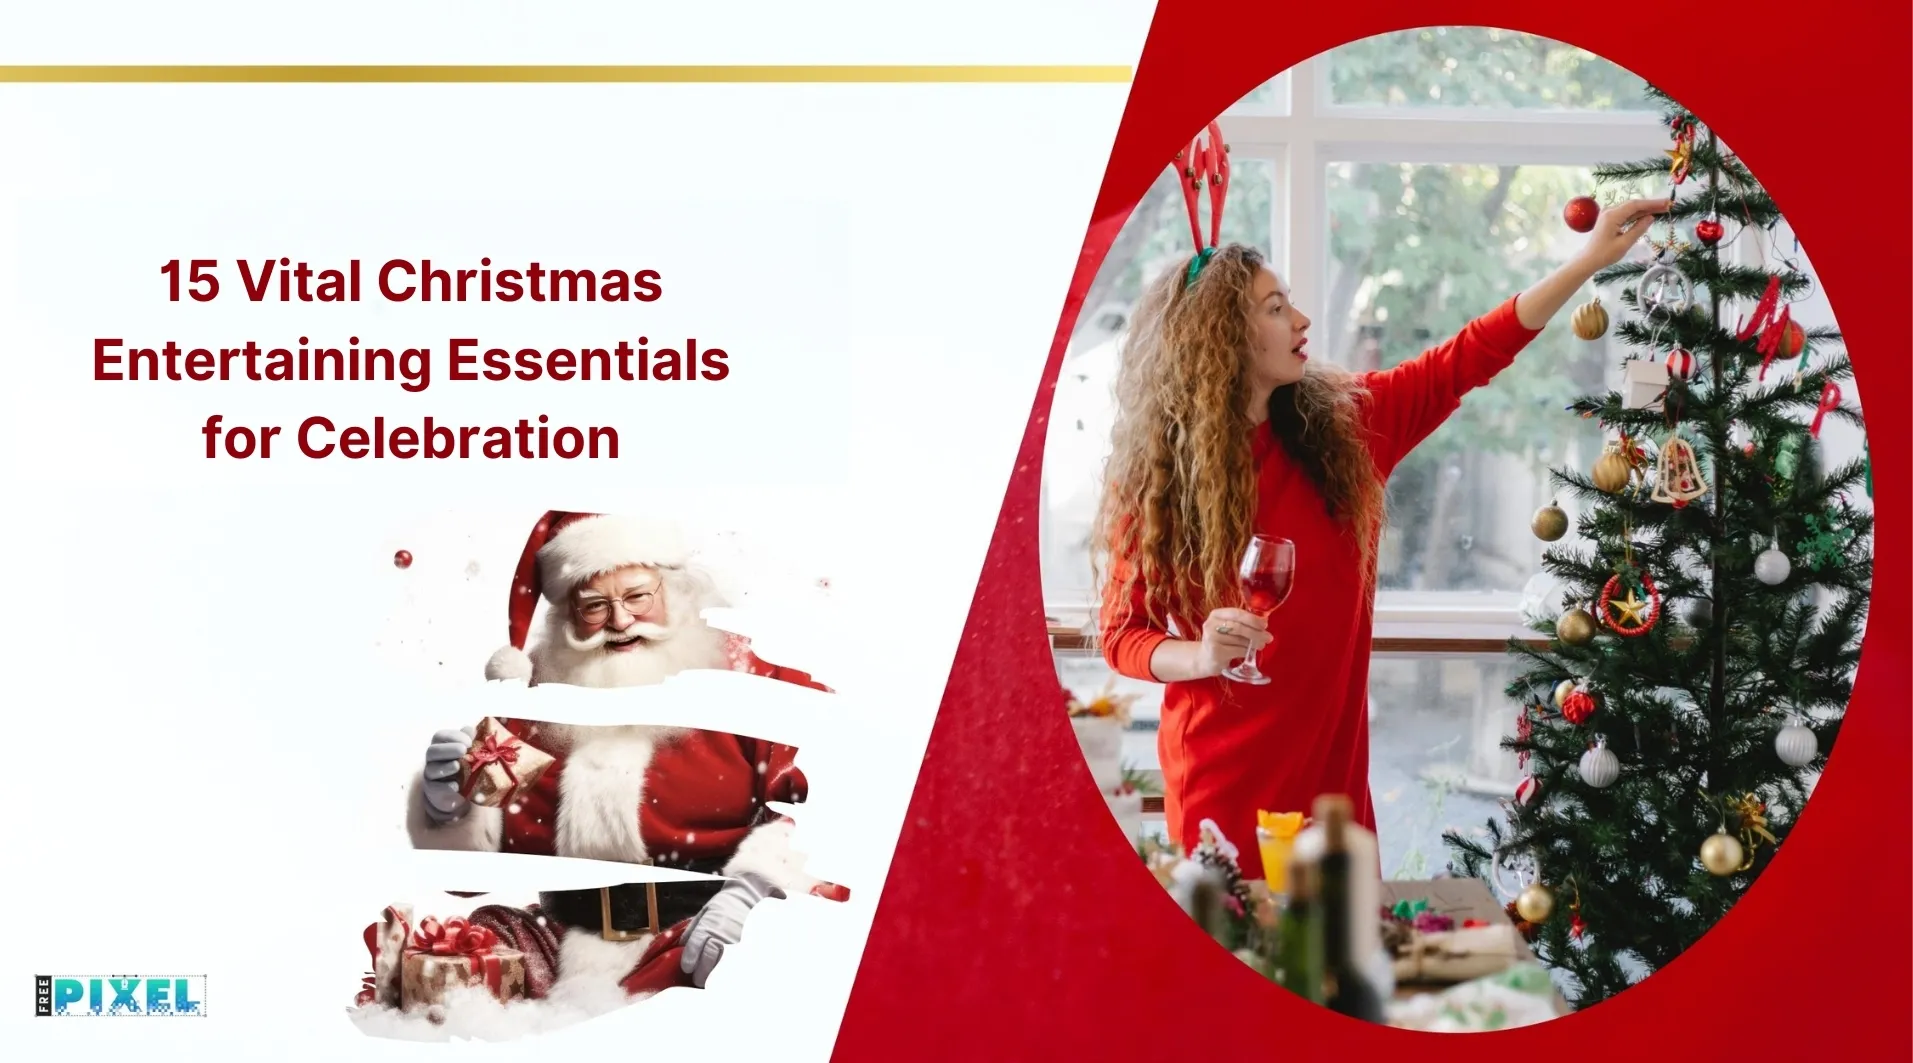 15 Vital Christmas Entertaining Essentials for Celebration